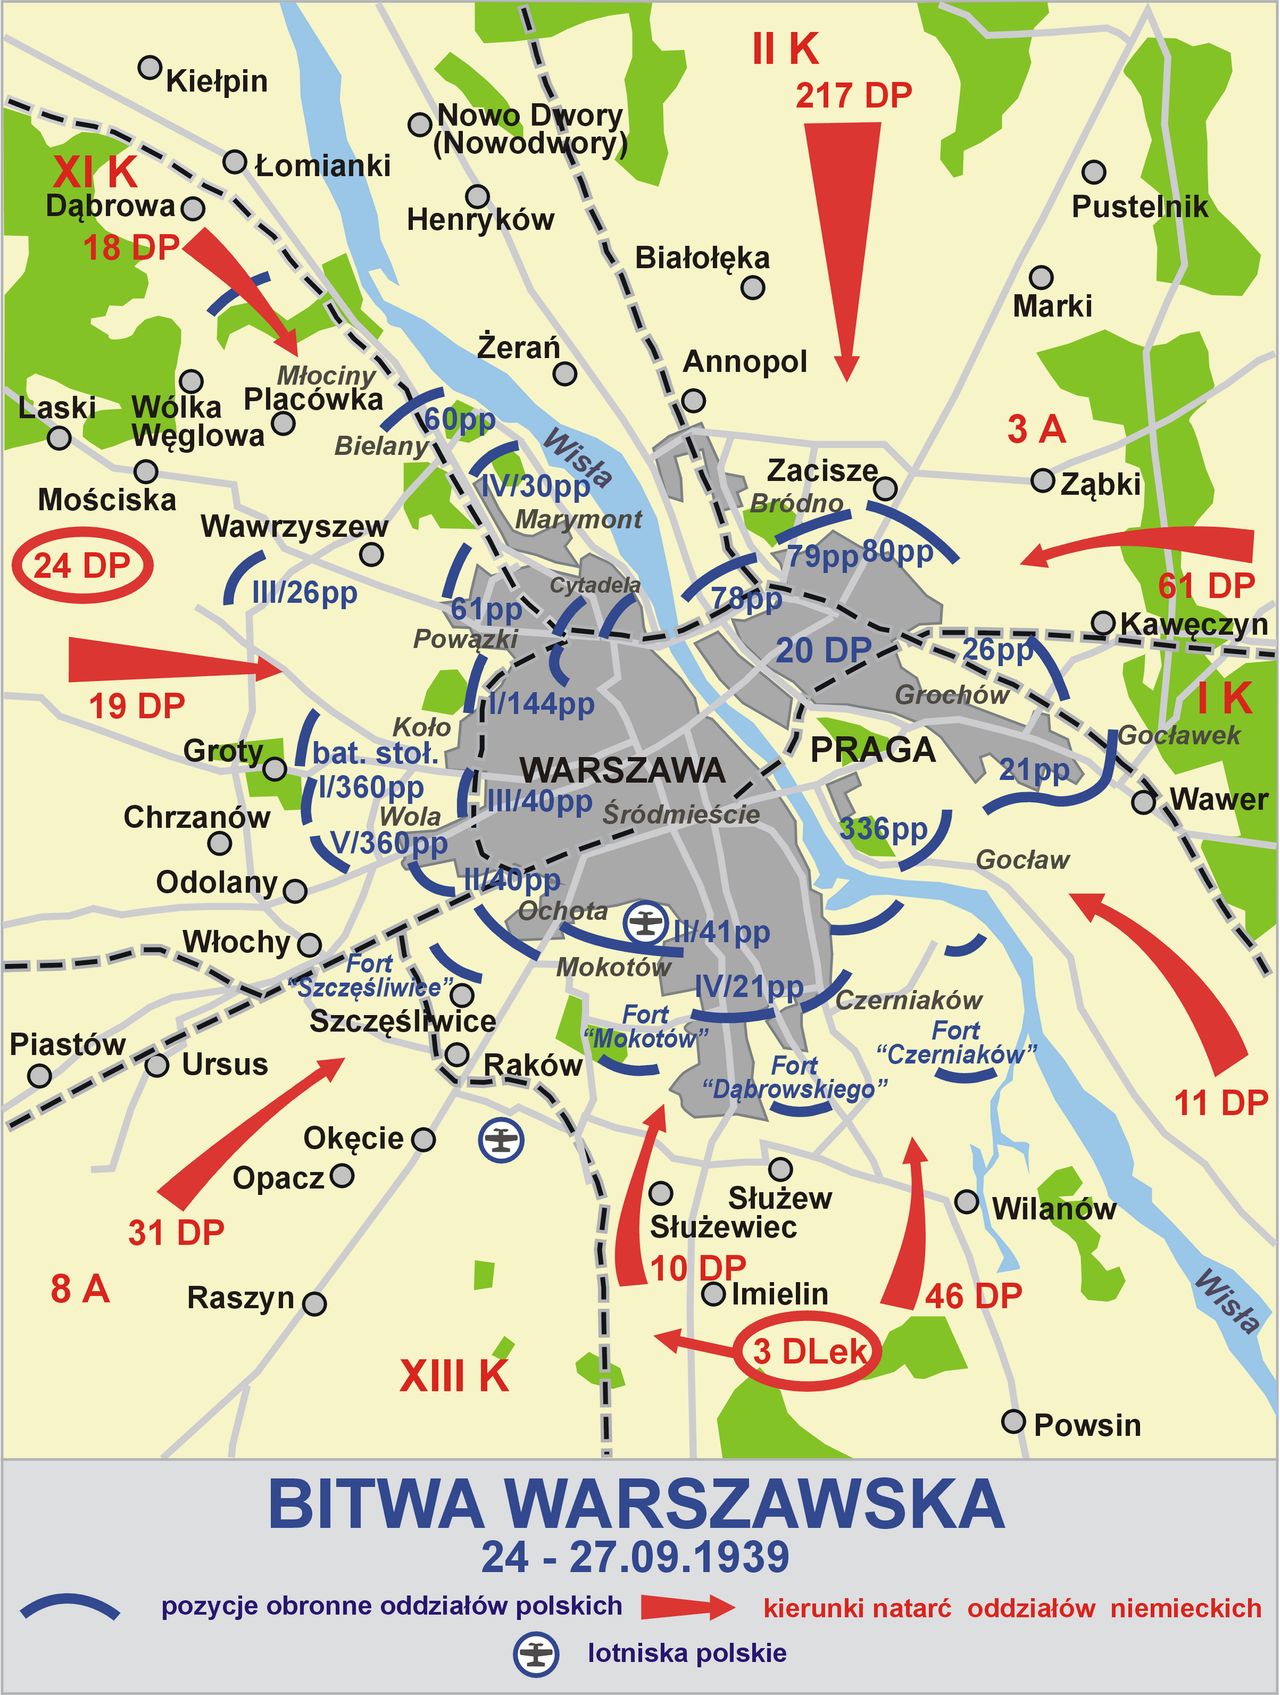 Bitwa warszawska [wikipedia]